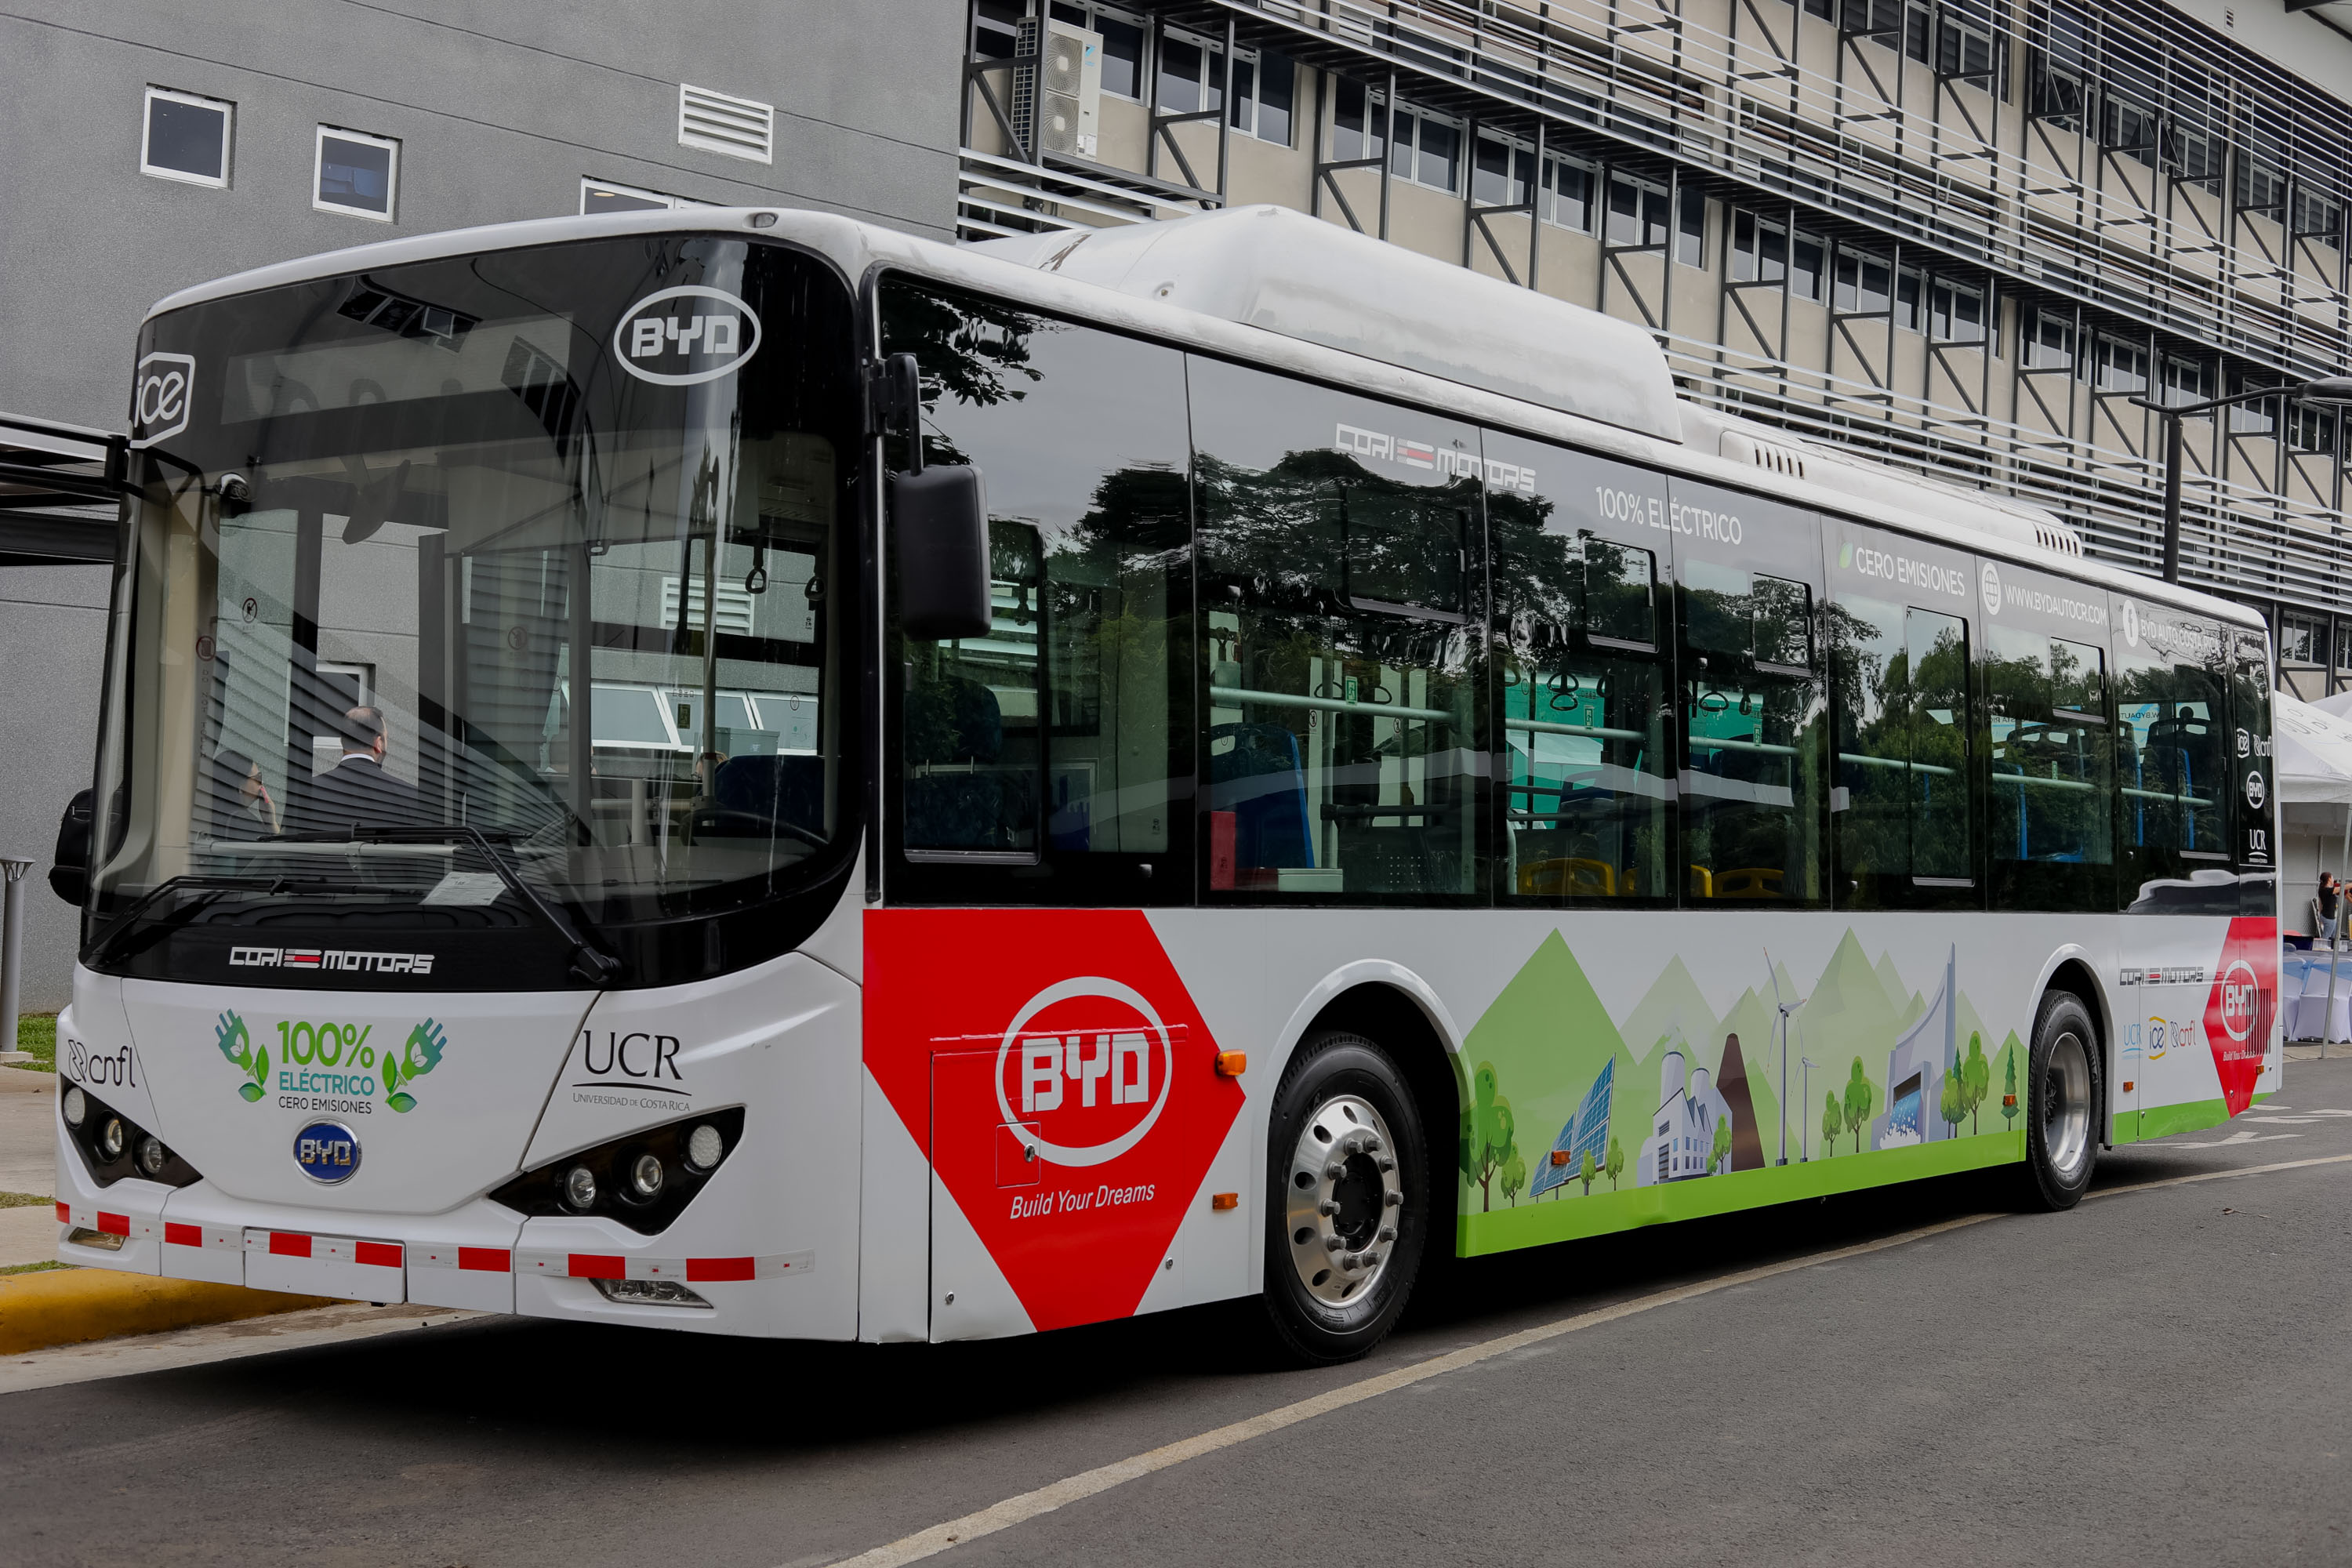 Primer bus eléctrico estará en el país por seis meses para que empresas aprendan sobre transporte eléctrico